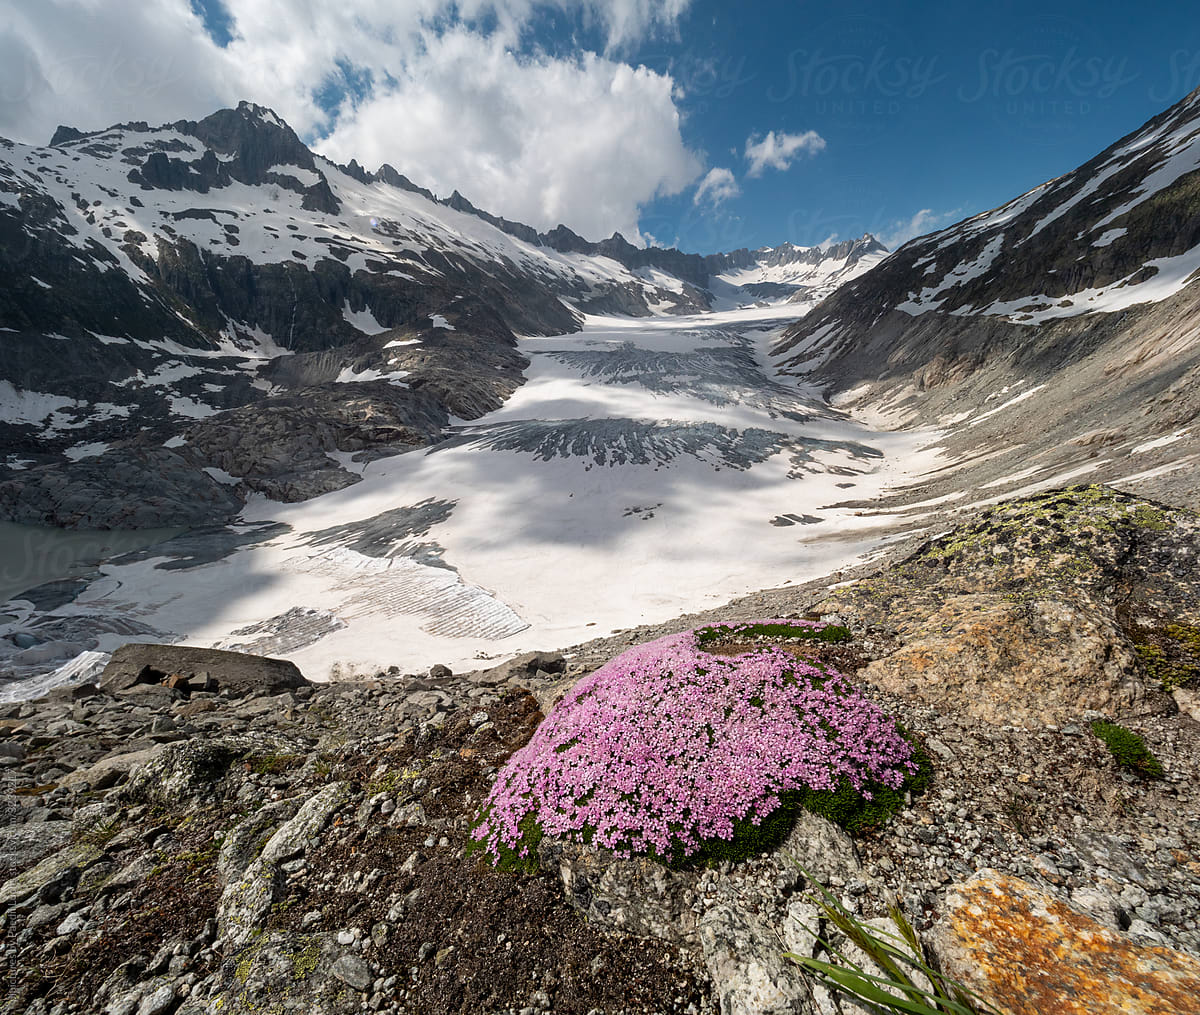 Glacier view and alpine flowers